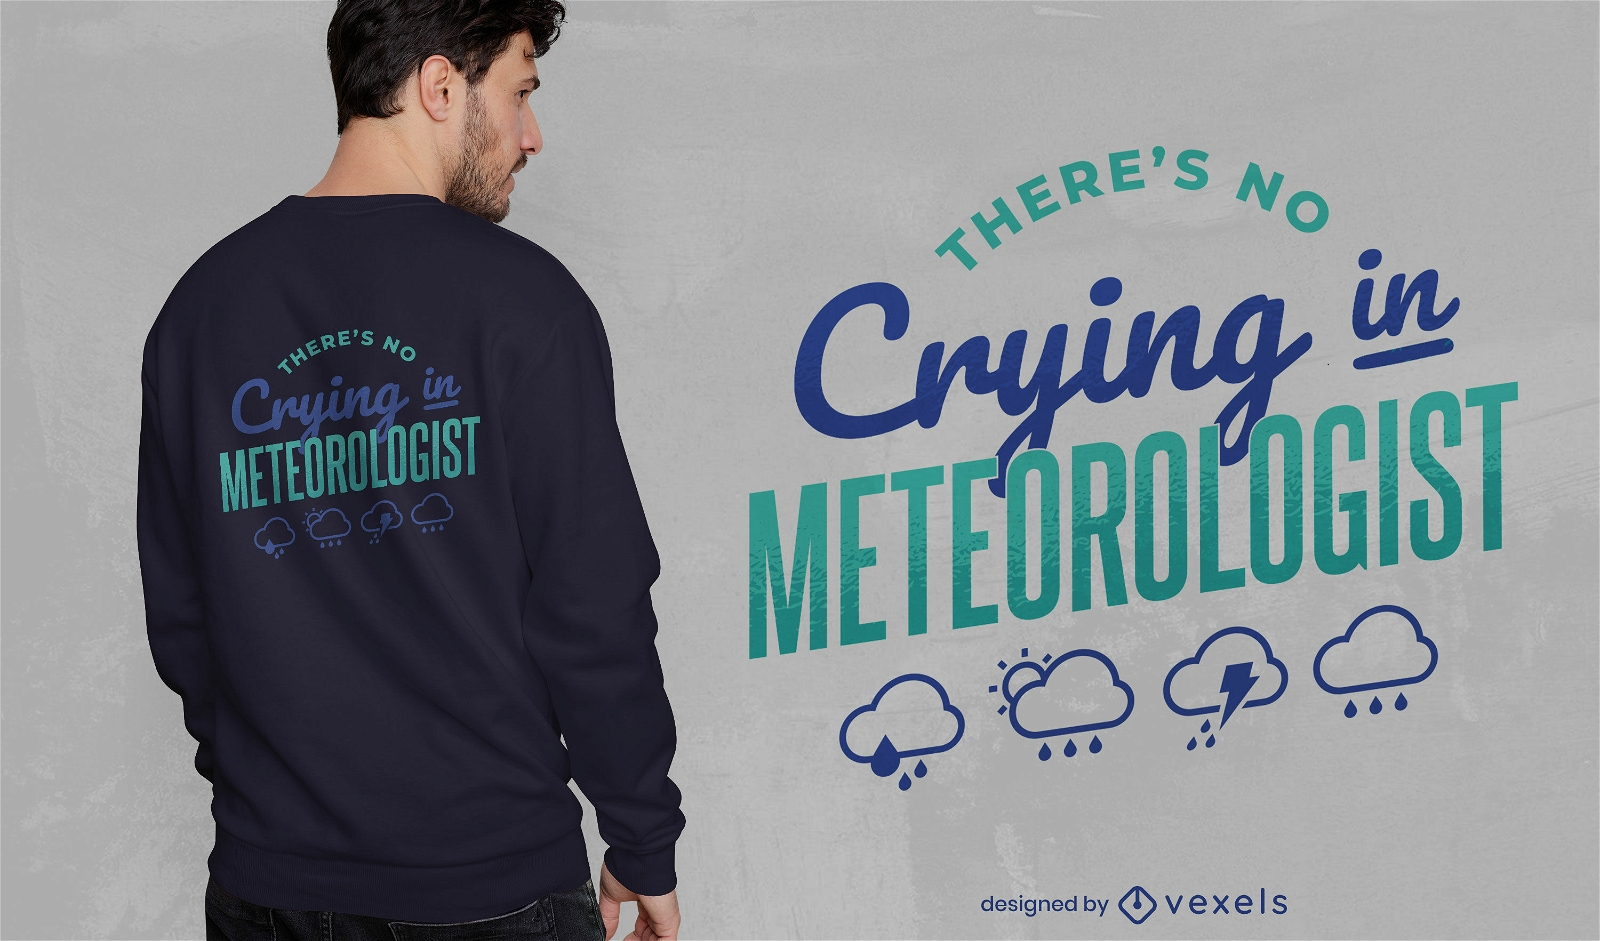 Meteorologist quote t-shirt design